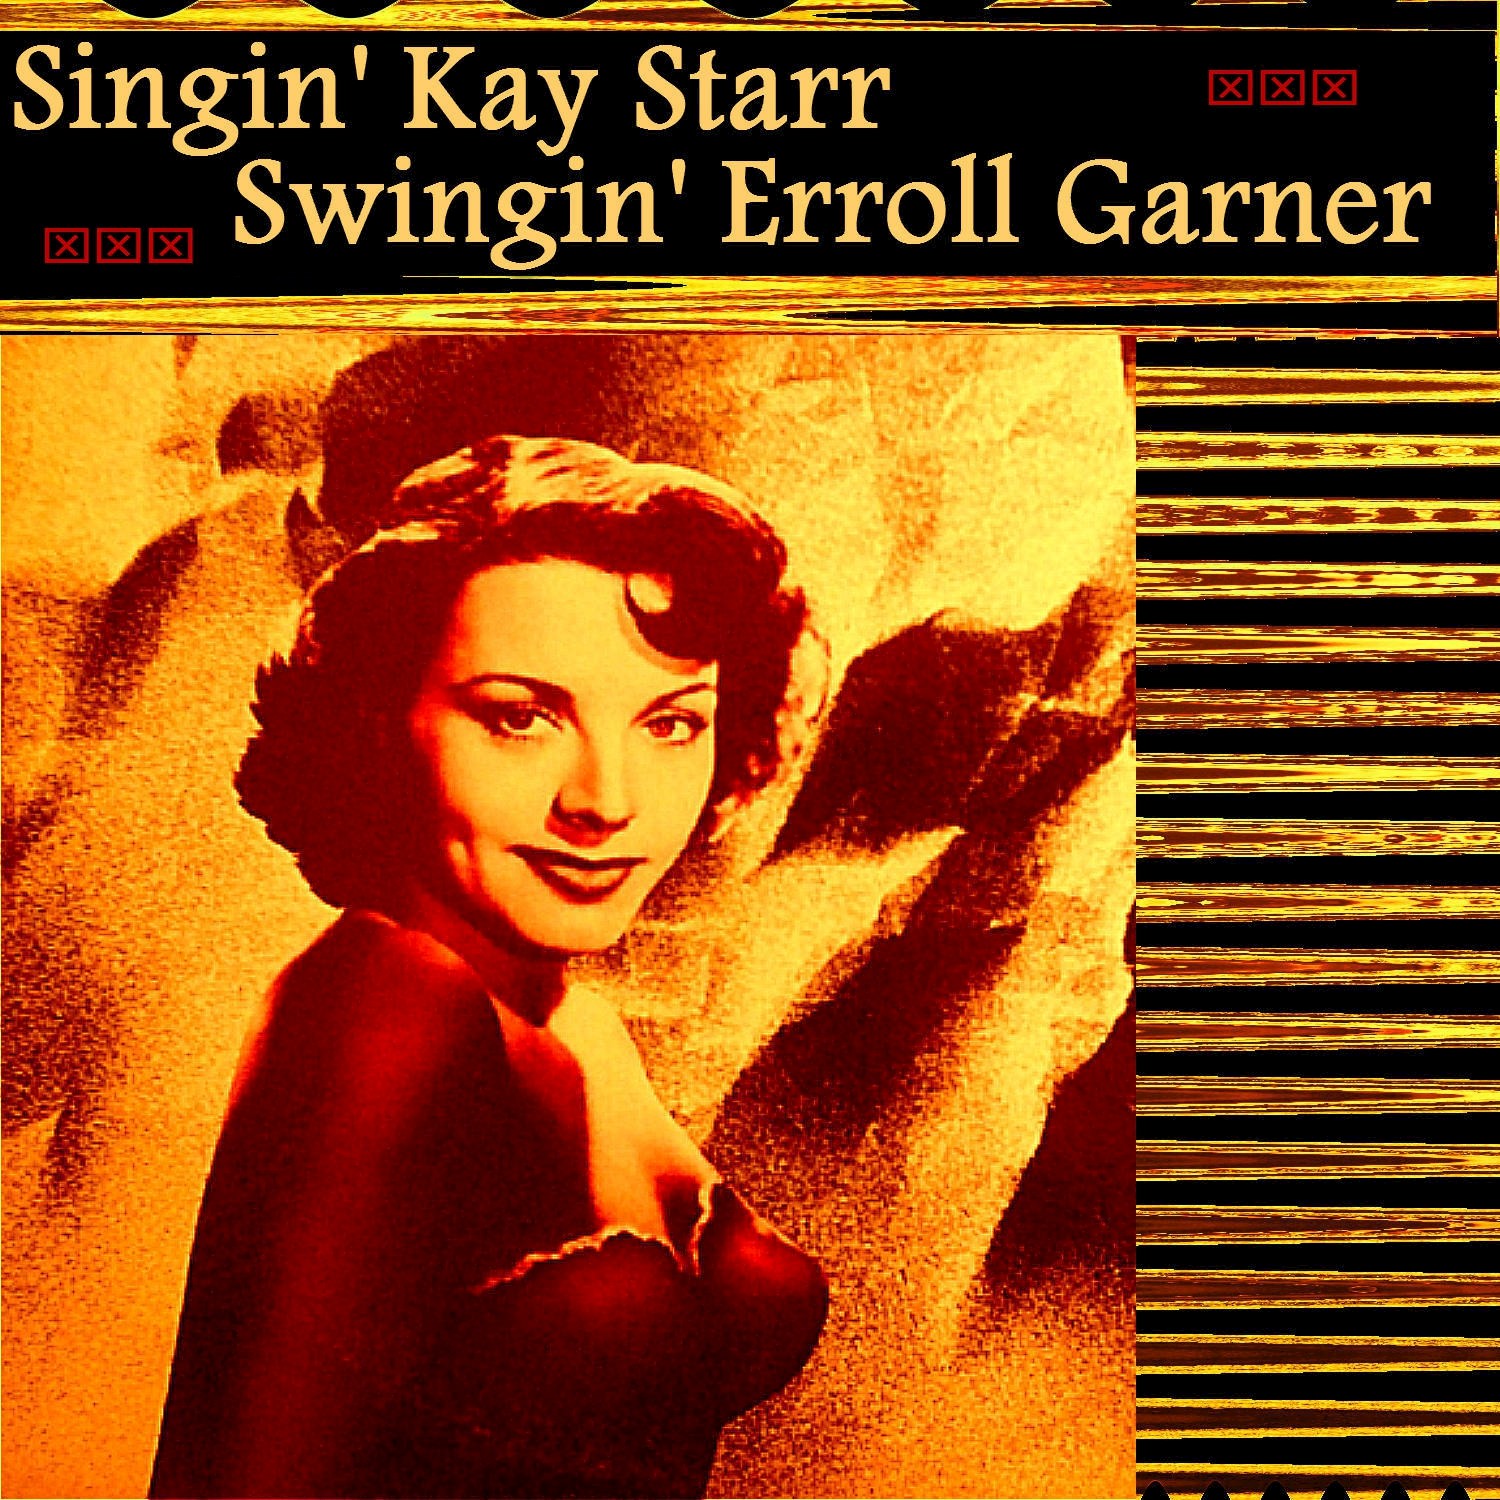 Singin' Kay Starr, Swingin' Erroll Garner